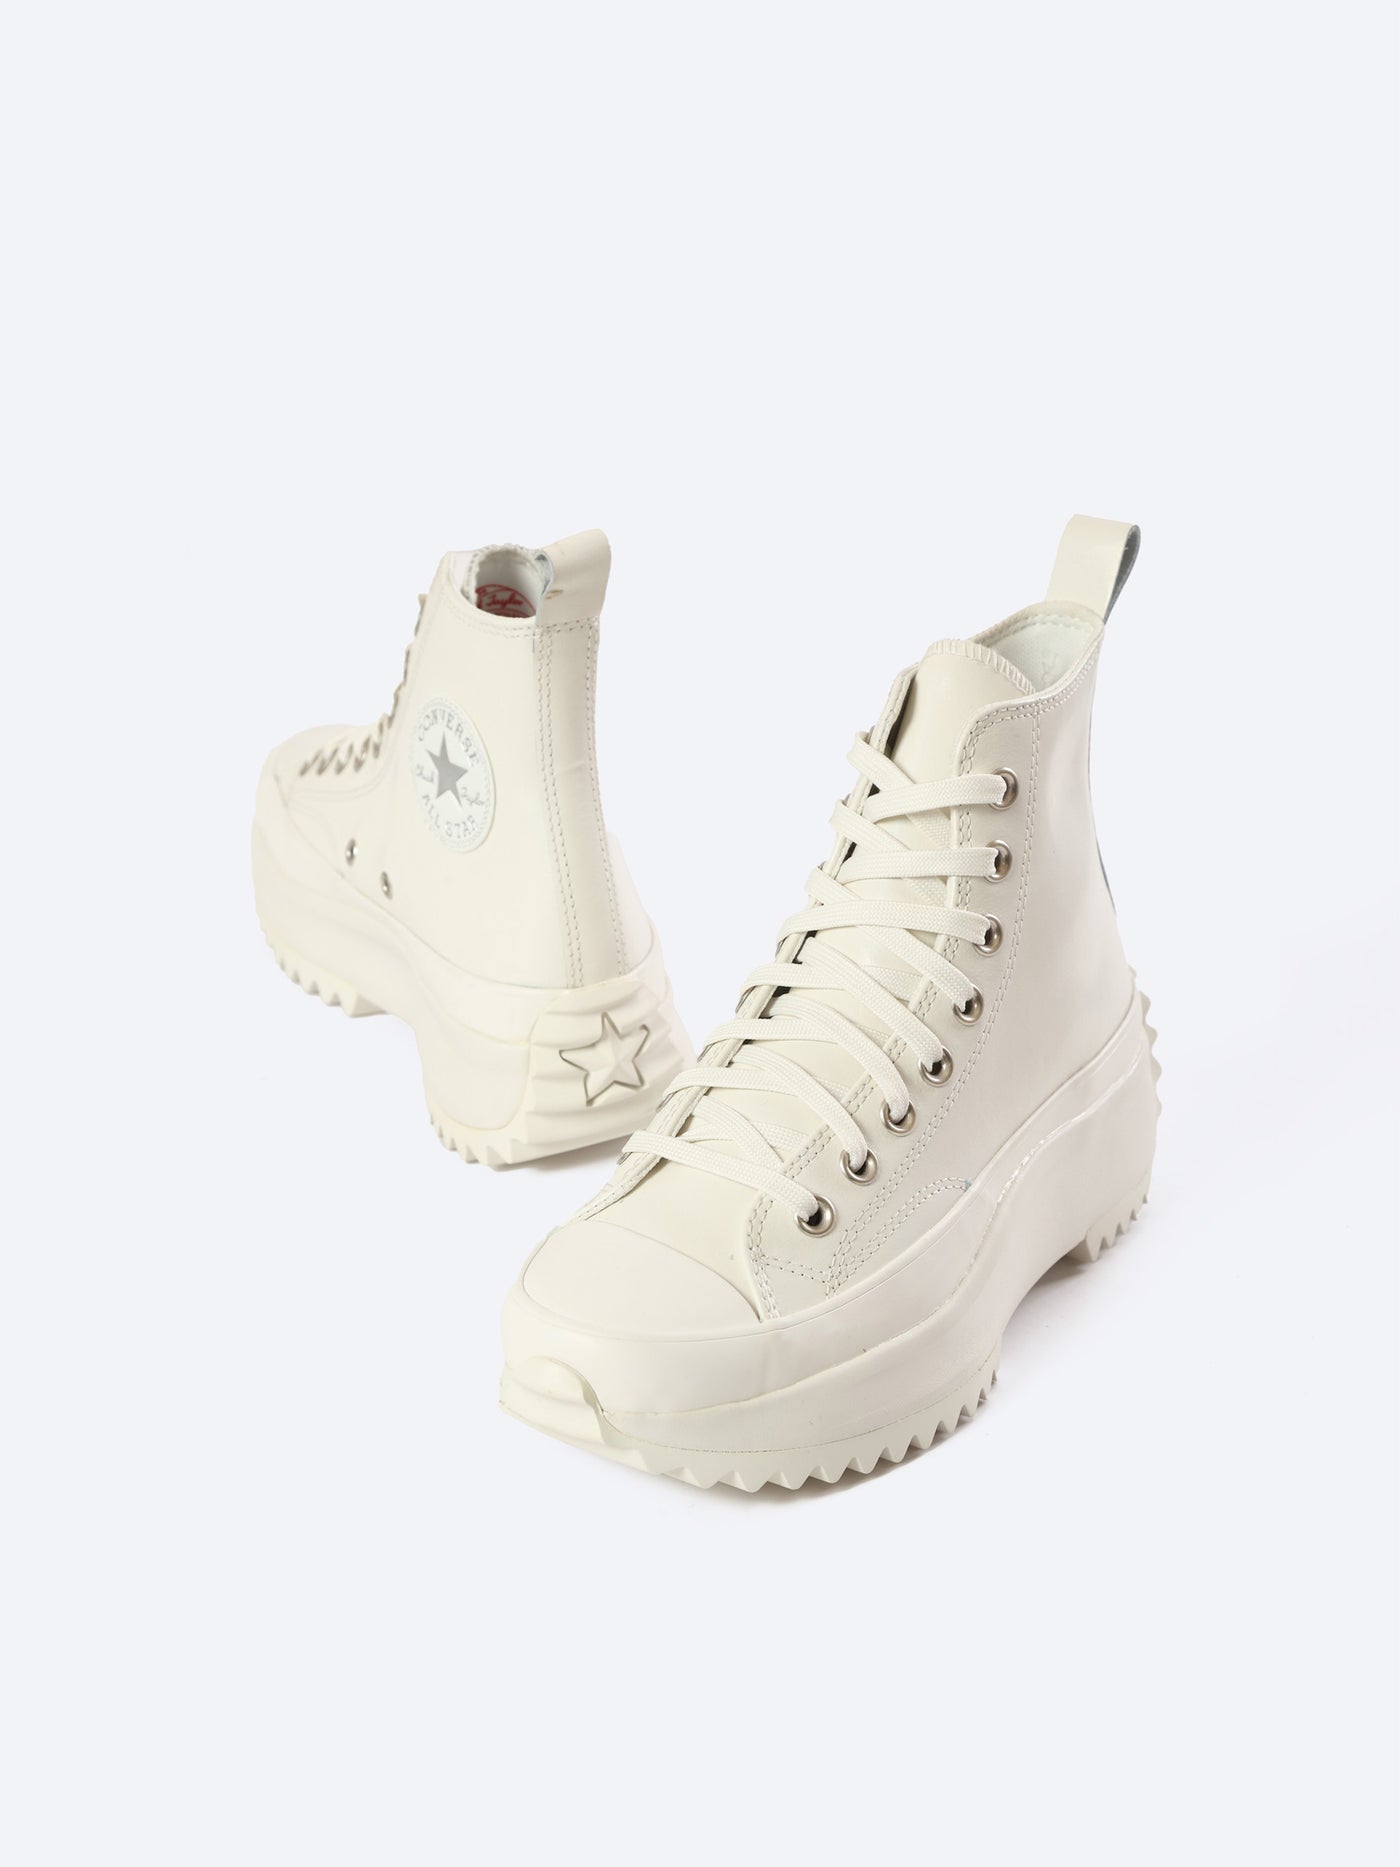 Sneakers - Run Star Hike Platform - Iridescent Leather